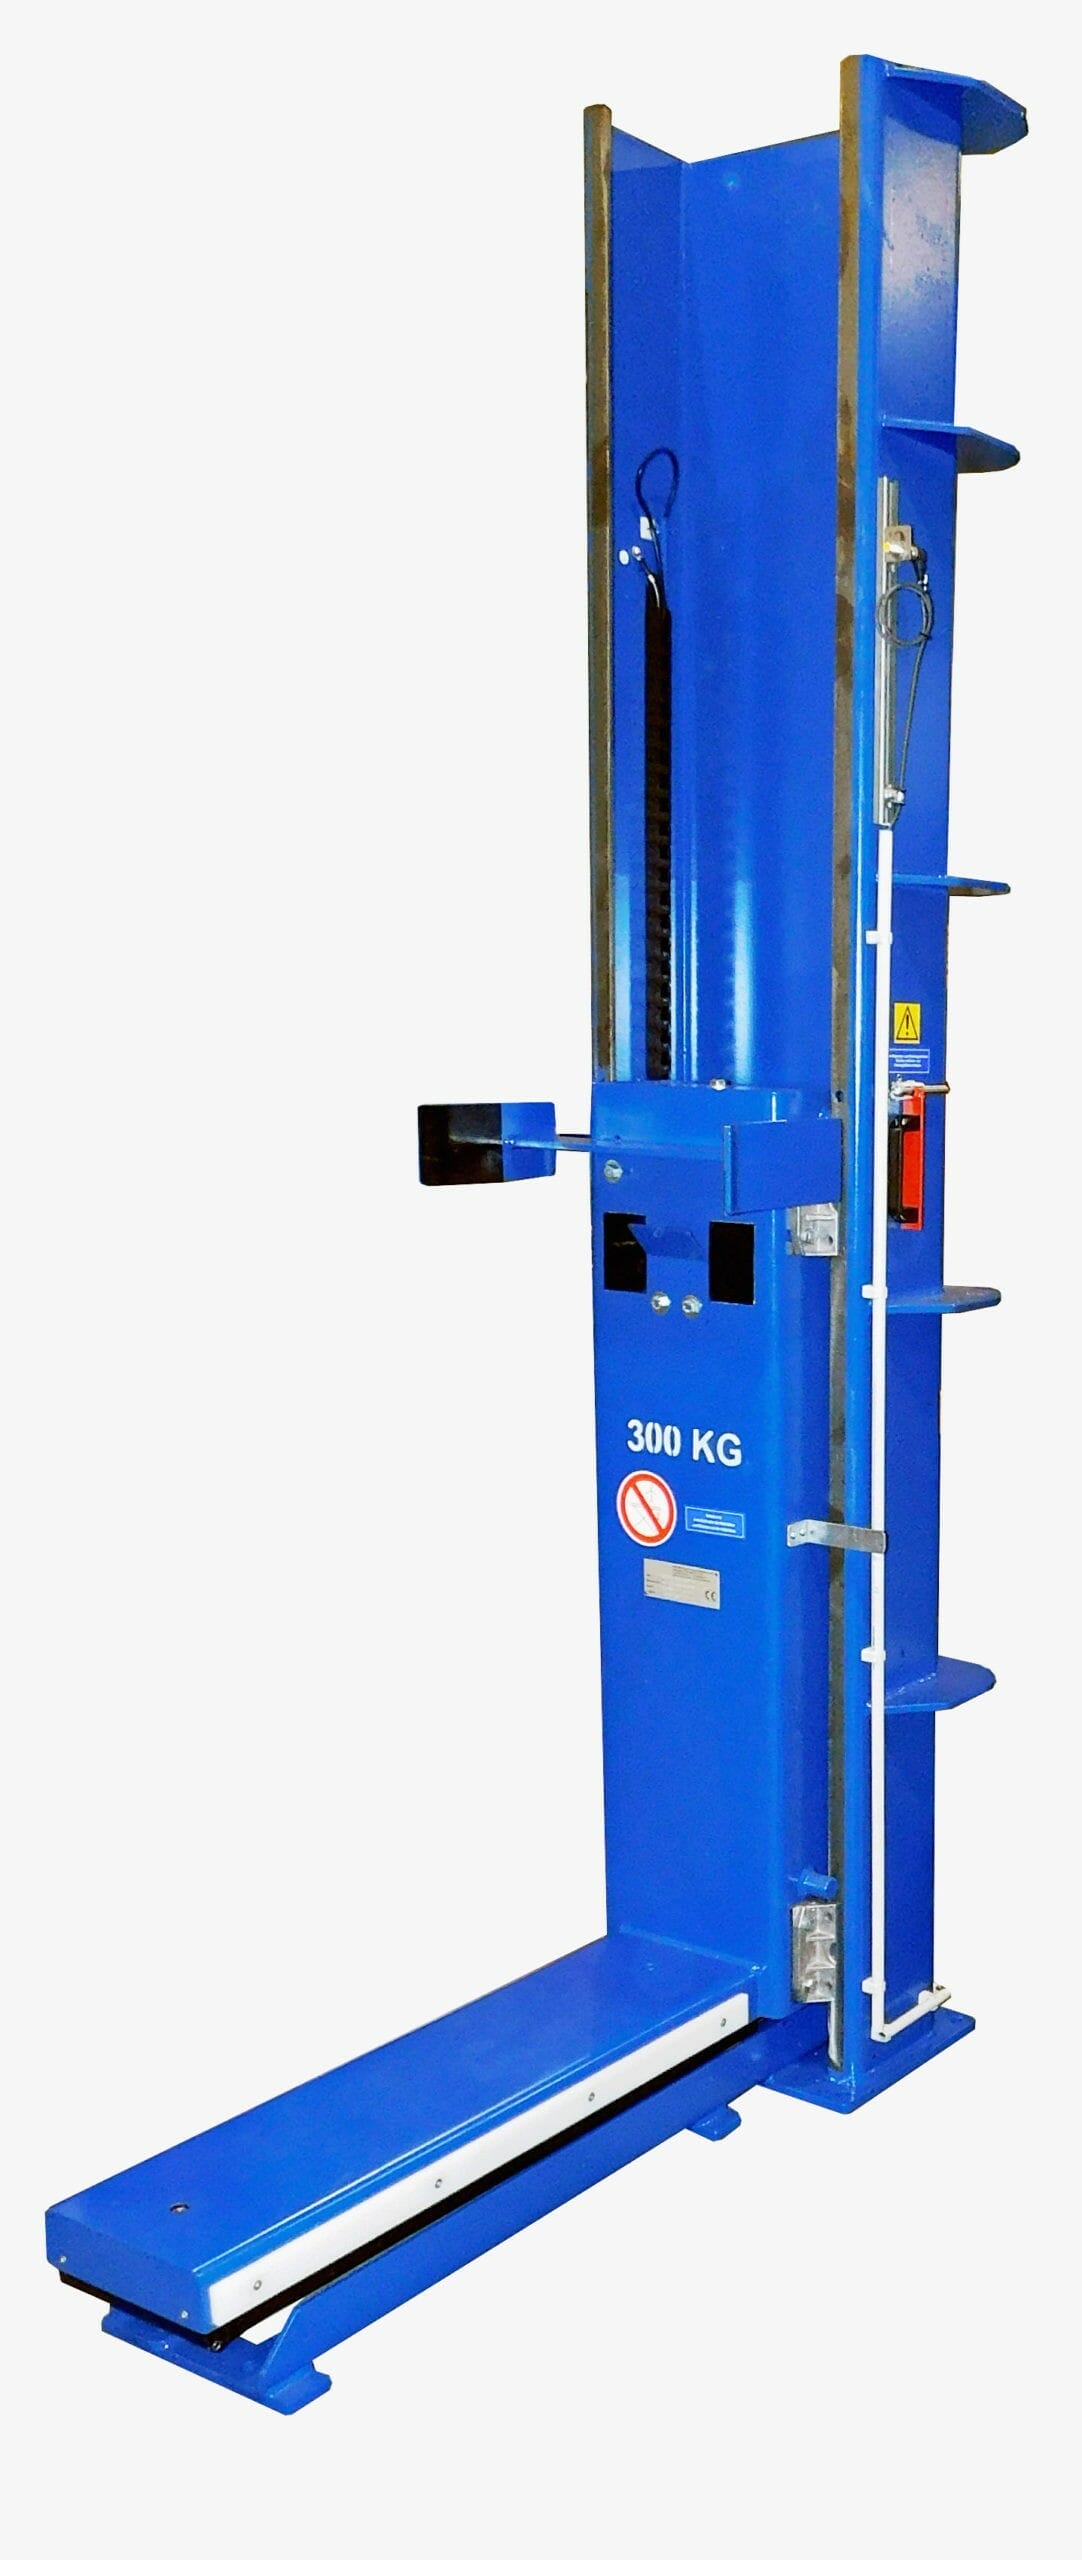 Figure vertical conveyor in blue